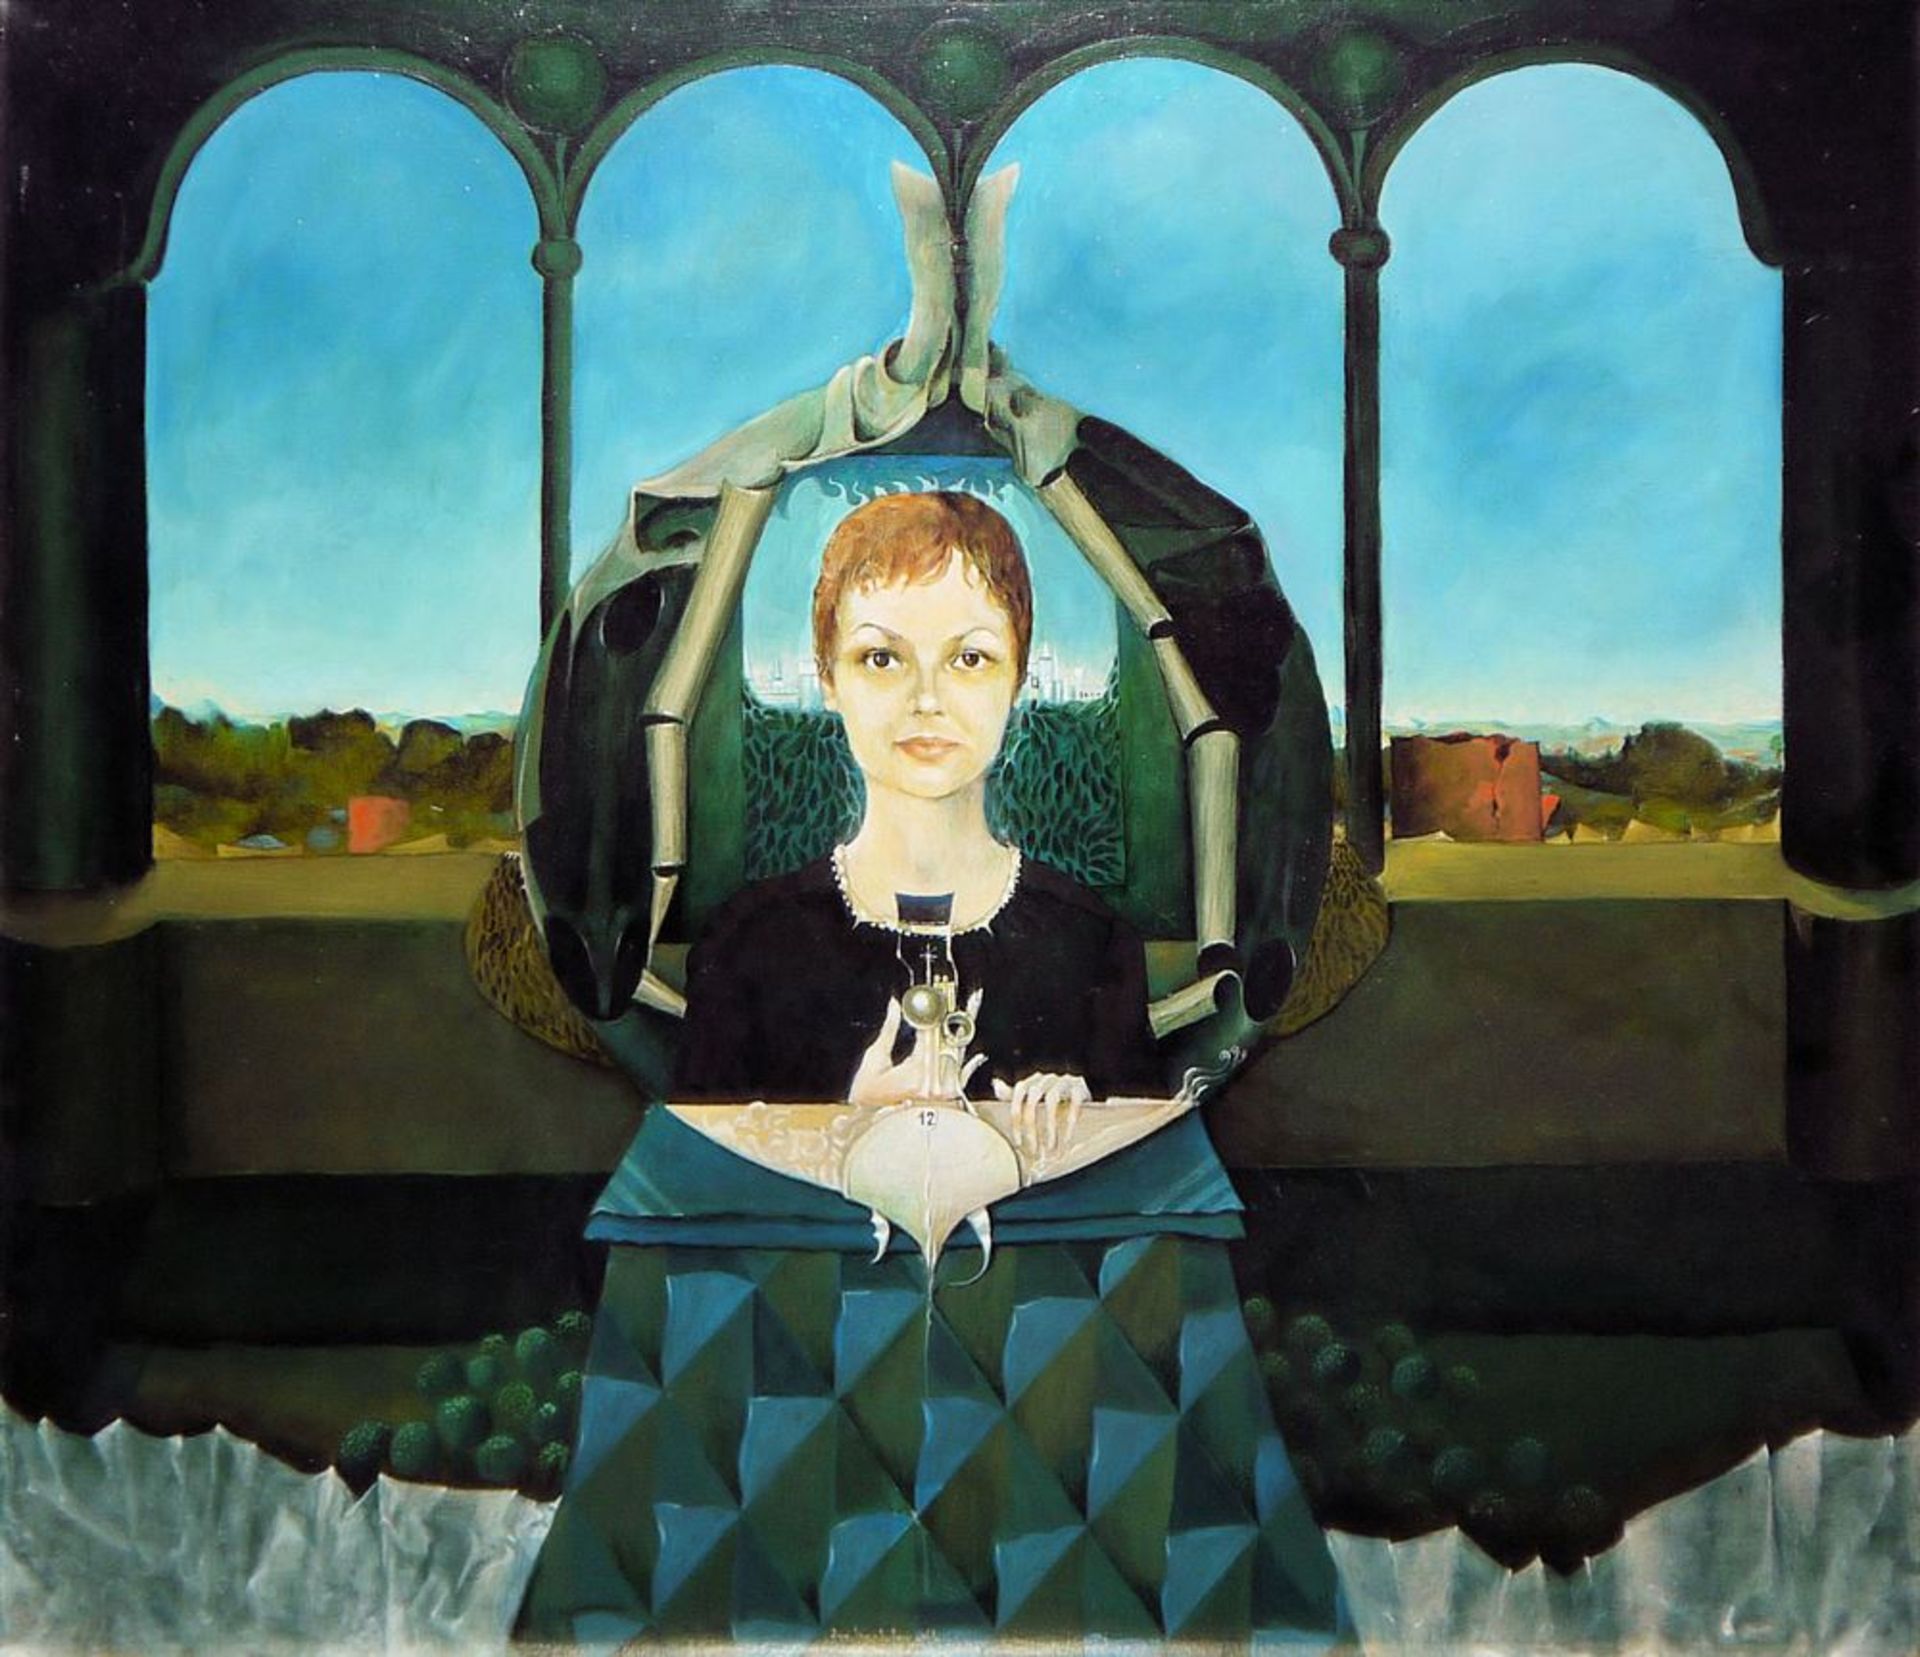 Joe Hackbarth, "Maria", surreal-fantastic oil painting 1966/70, framed, with the monograph "Joe Hac